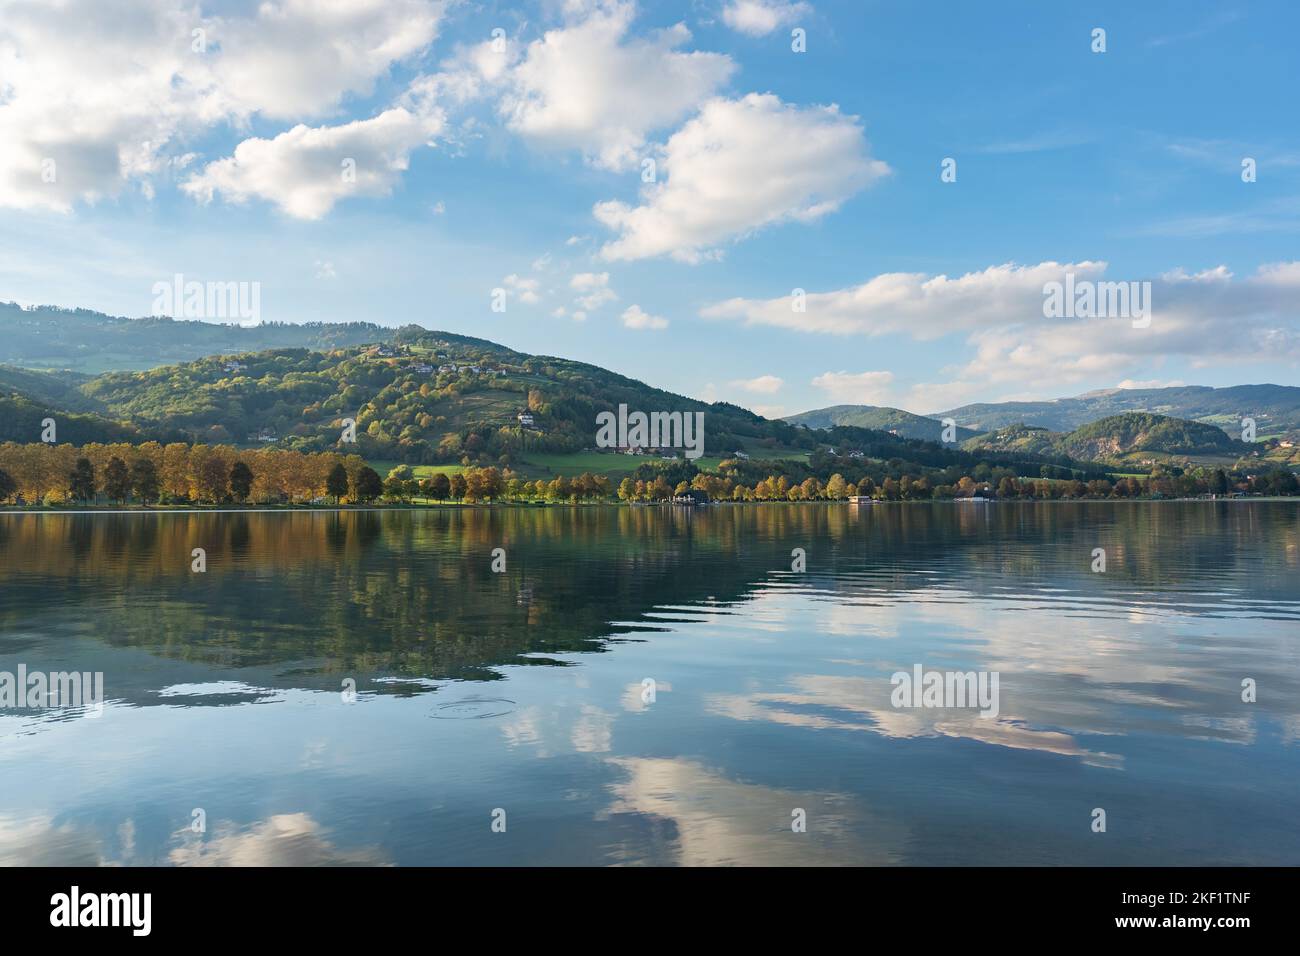 Lake Stubenbergsee in Styria, Austria. Scenic autumn landscape with reflection. Stock Photo